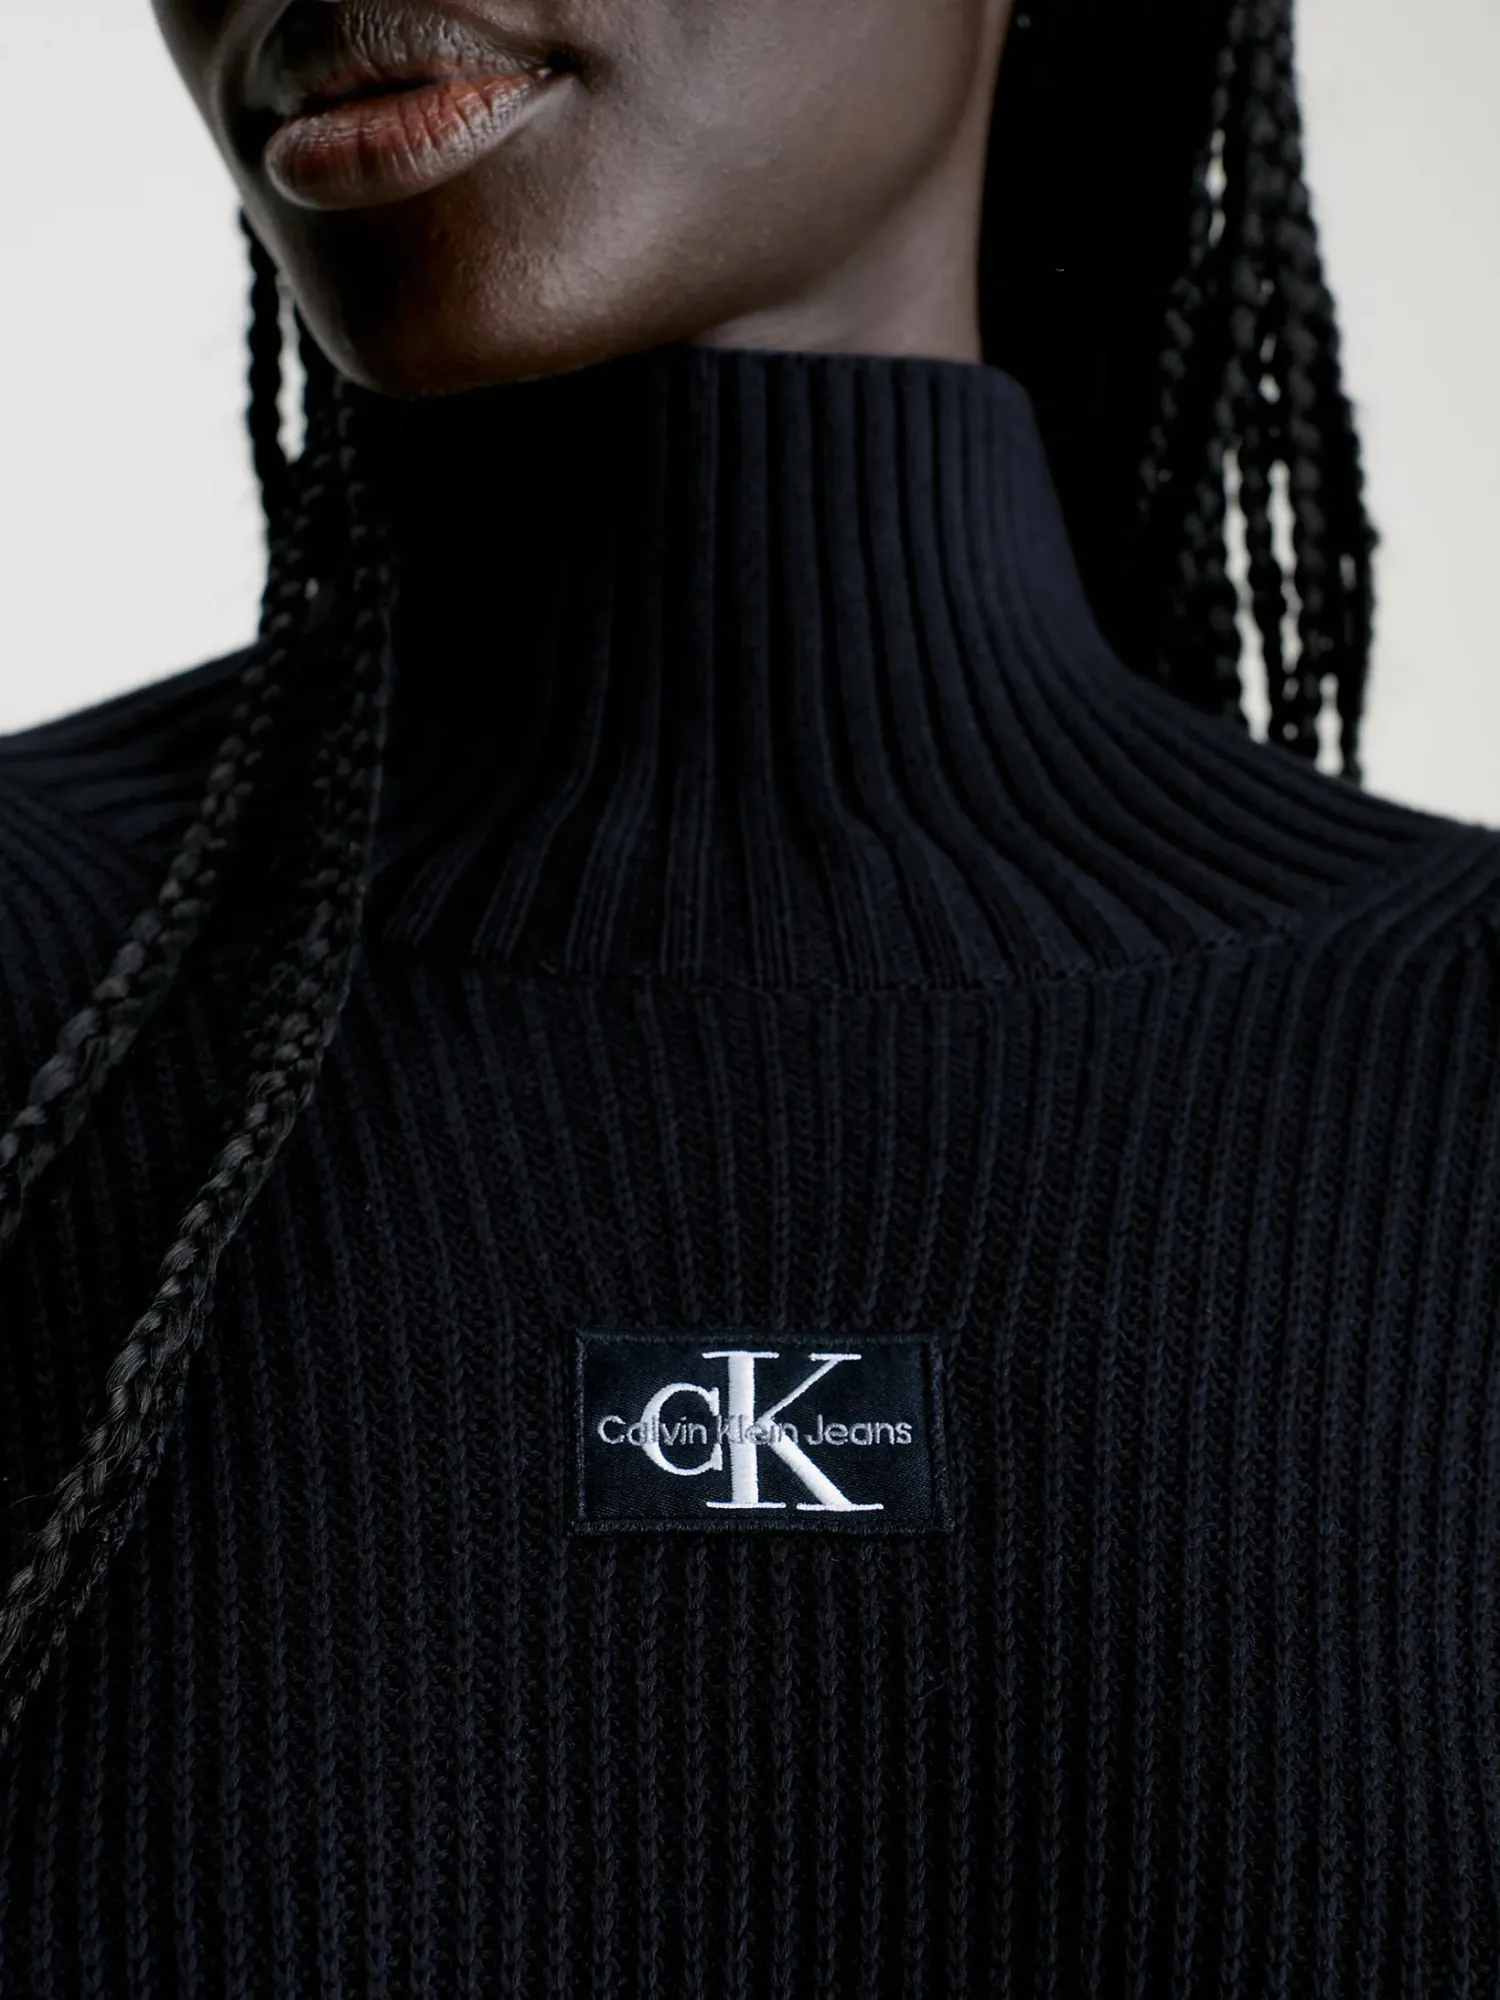 CALVIN KLEIN JEANS Woven | Dress Label Sweater Loose - CK Black Choice+Attitude